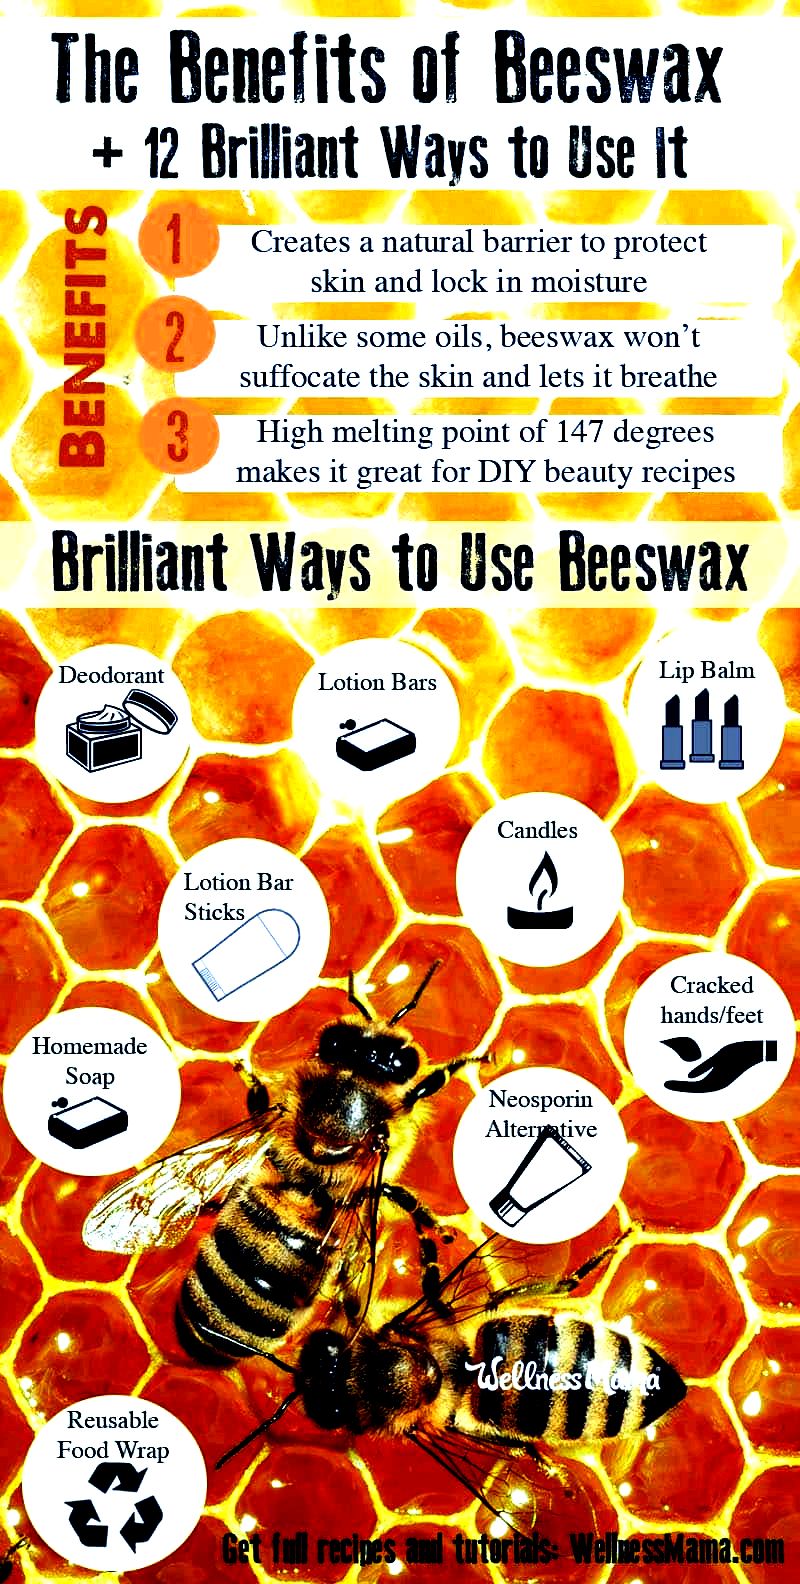 Benefits of Beeswax